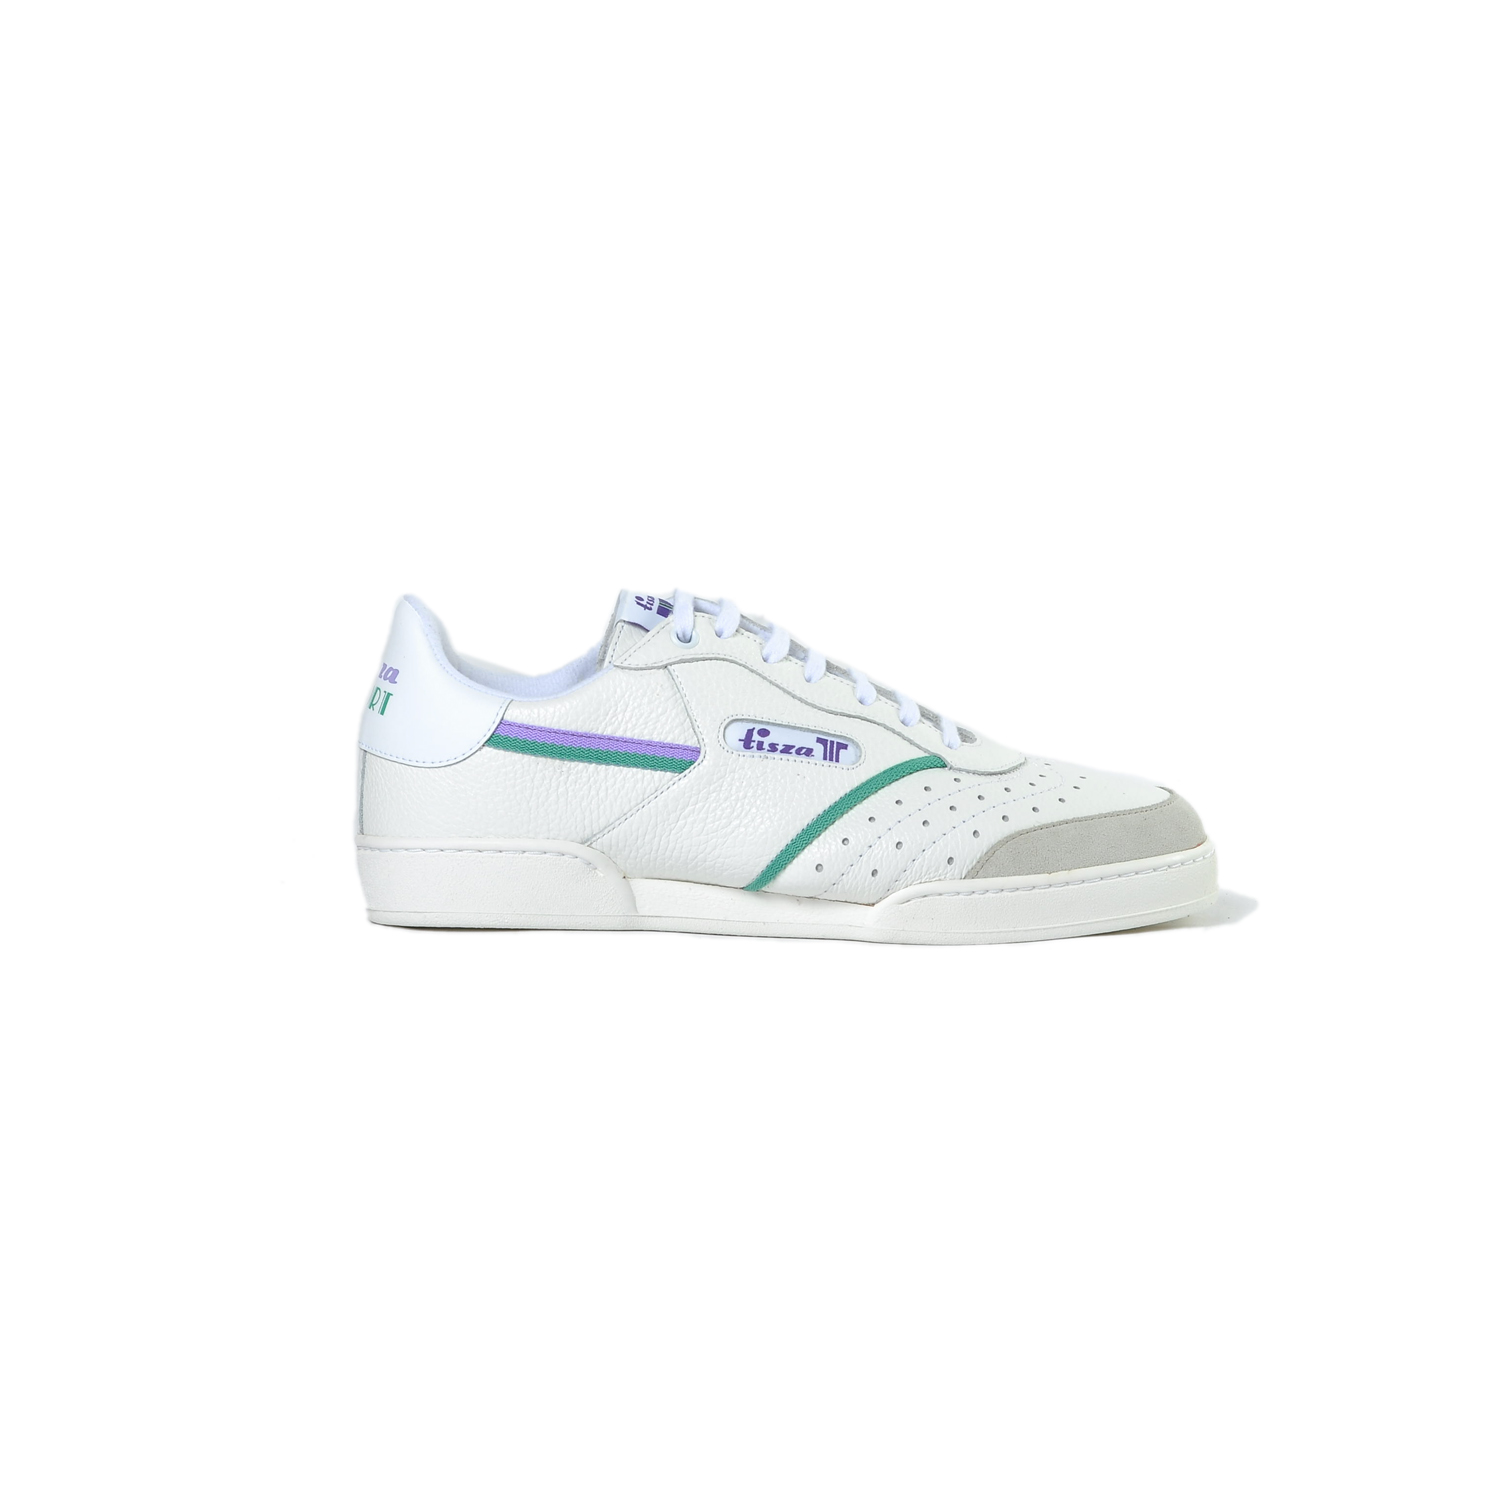 Tisza shoes - Sport - White-purple-green